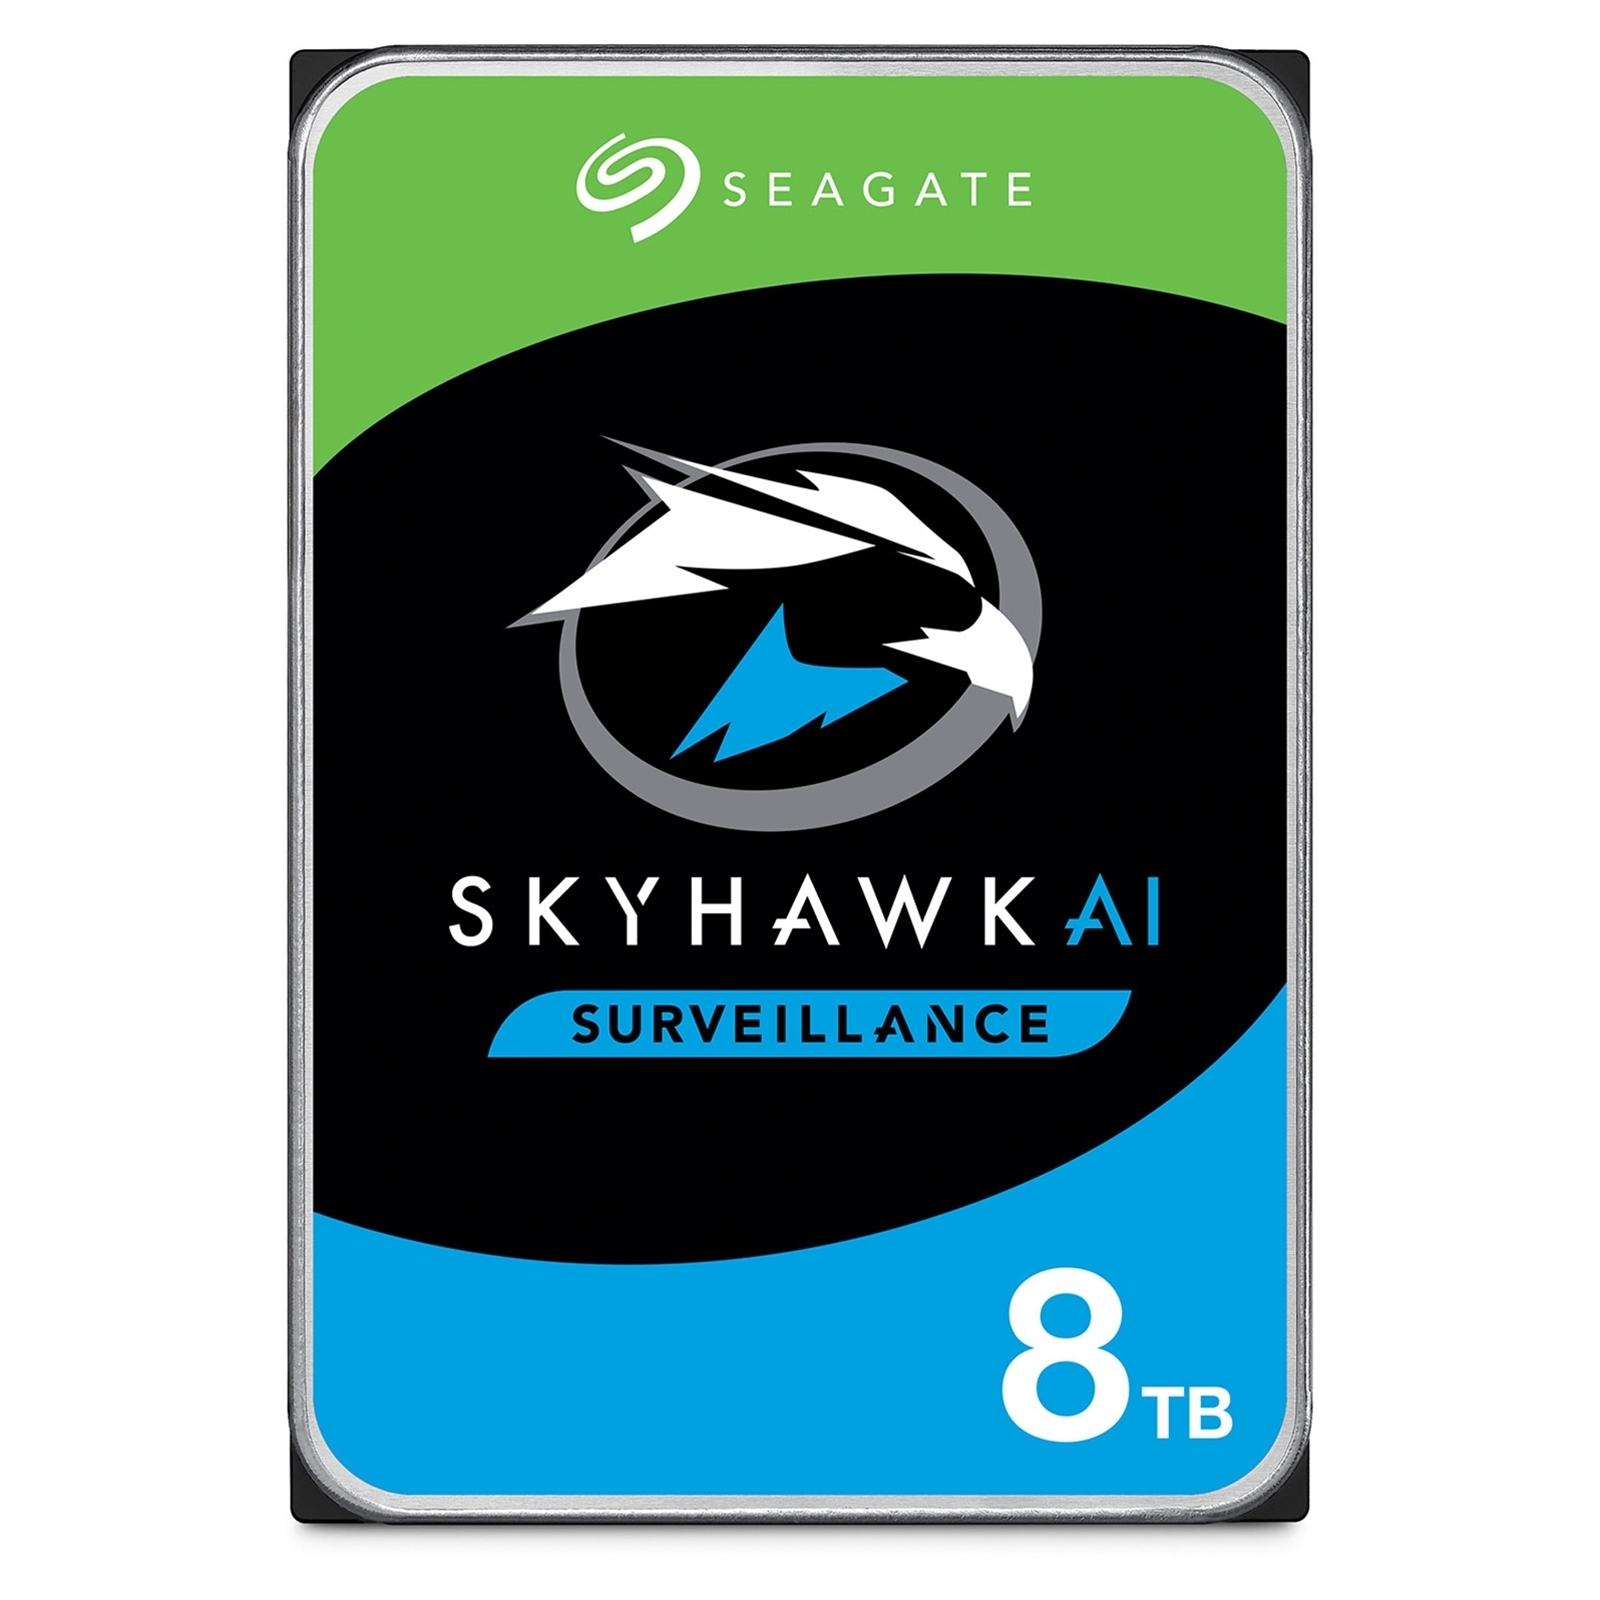 Seagate SkyHawk Surveillance AI ST8000VE001 8TB 3.5'' 7200RPM 256MB Cache SATA III Internal Hard Drive